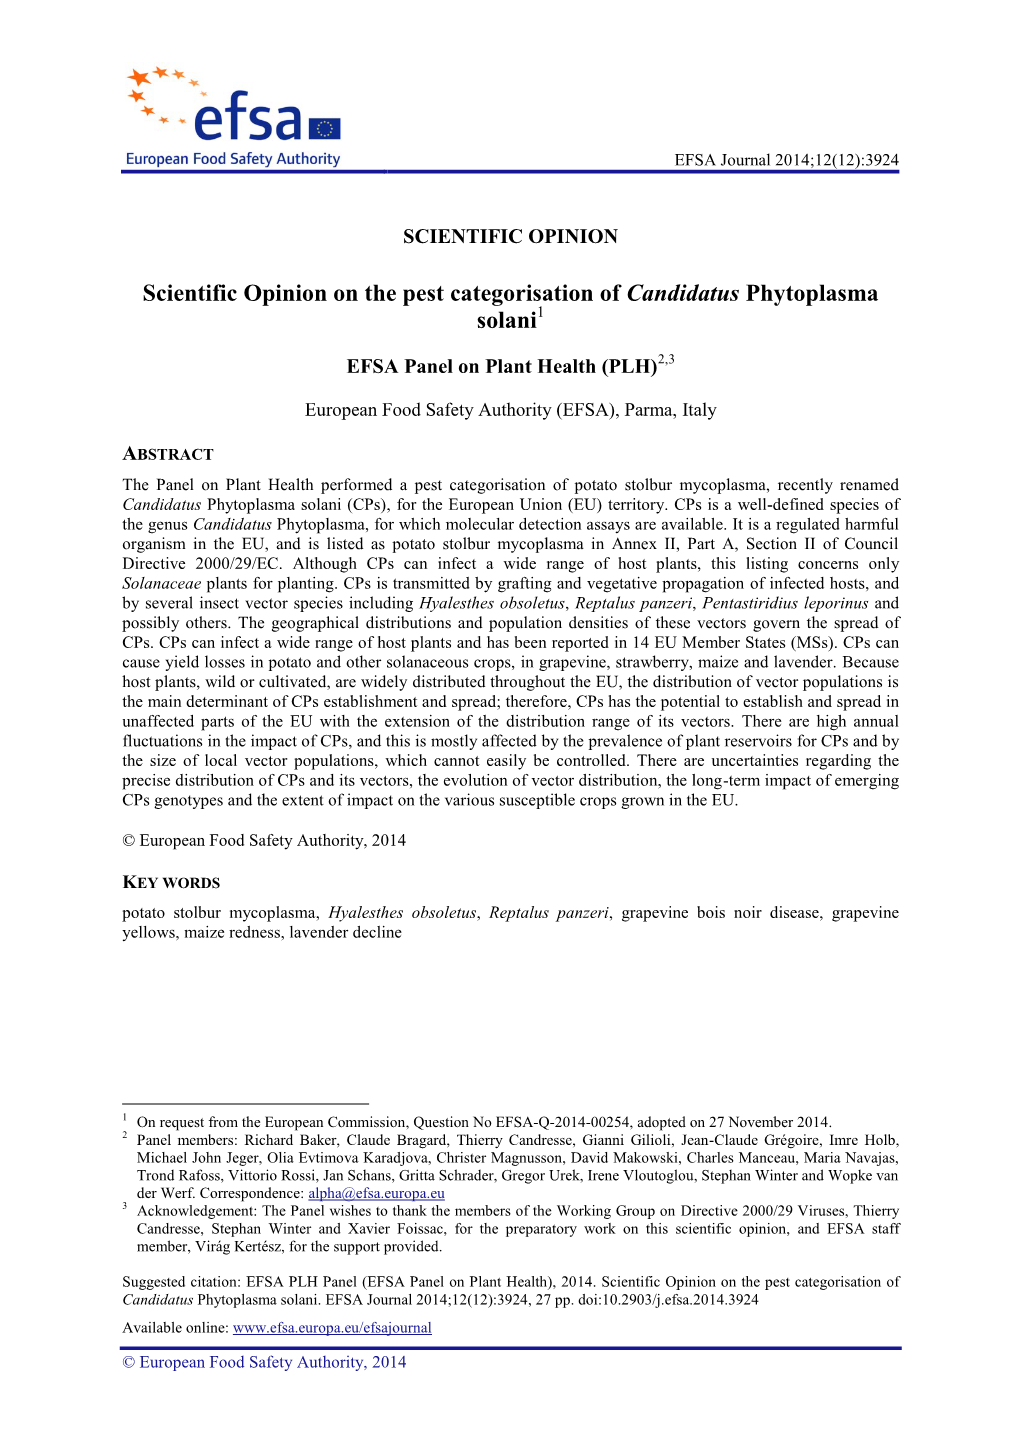 Scientific Opinion on the Pest Categorisation of Candidatus Phytoplasma Solani1